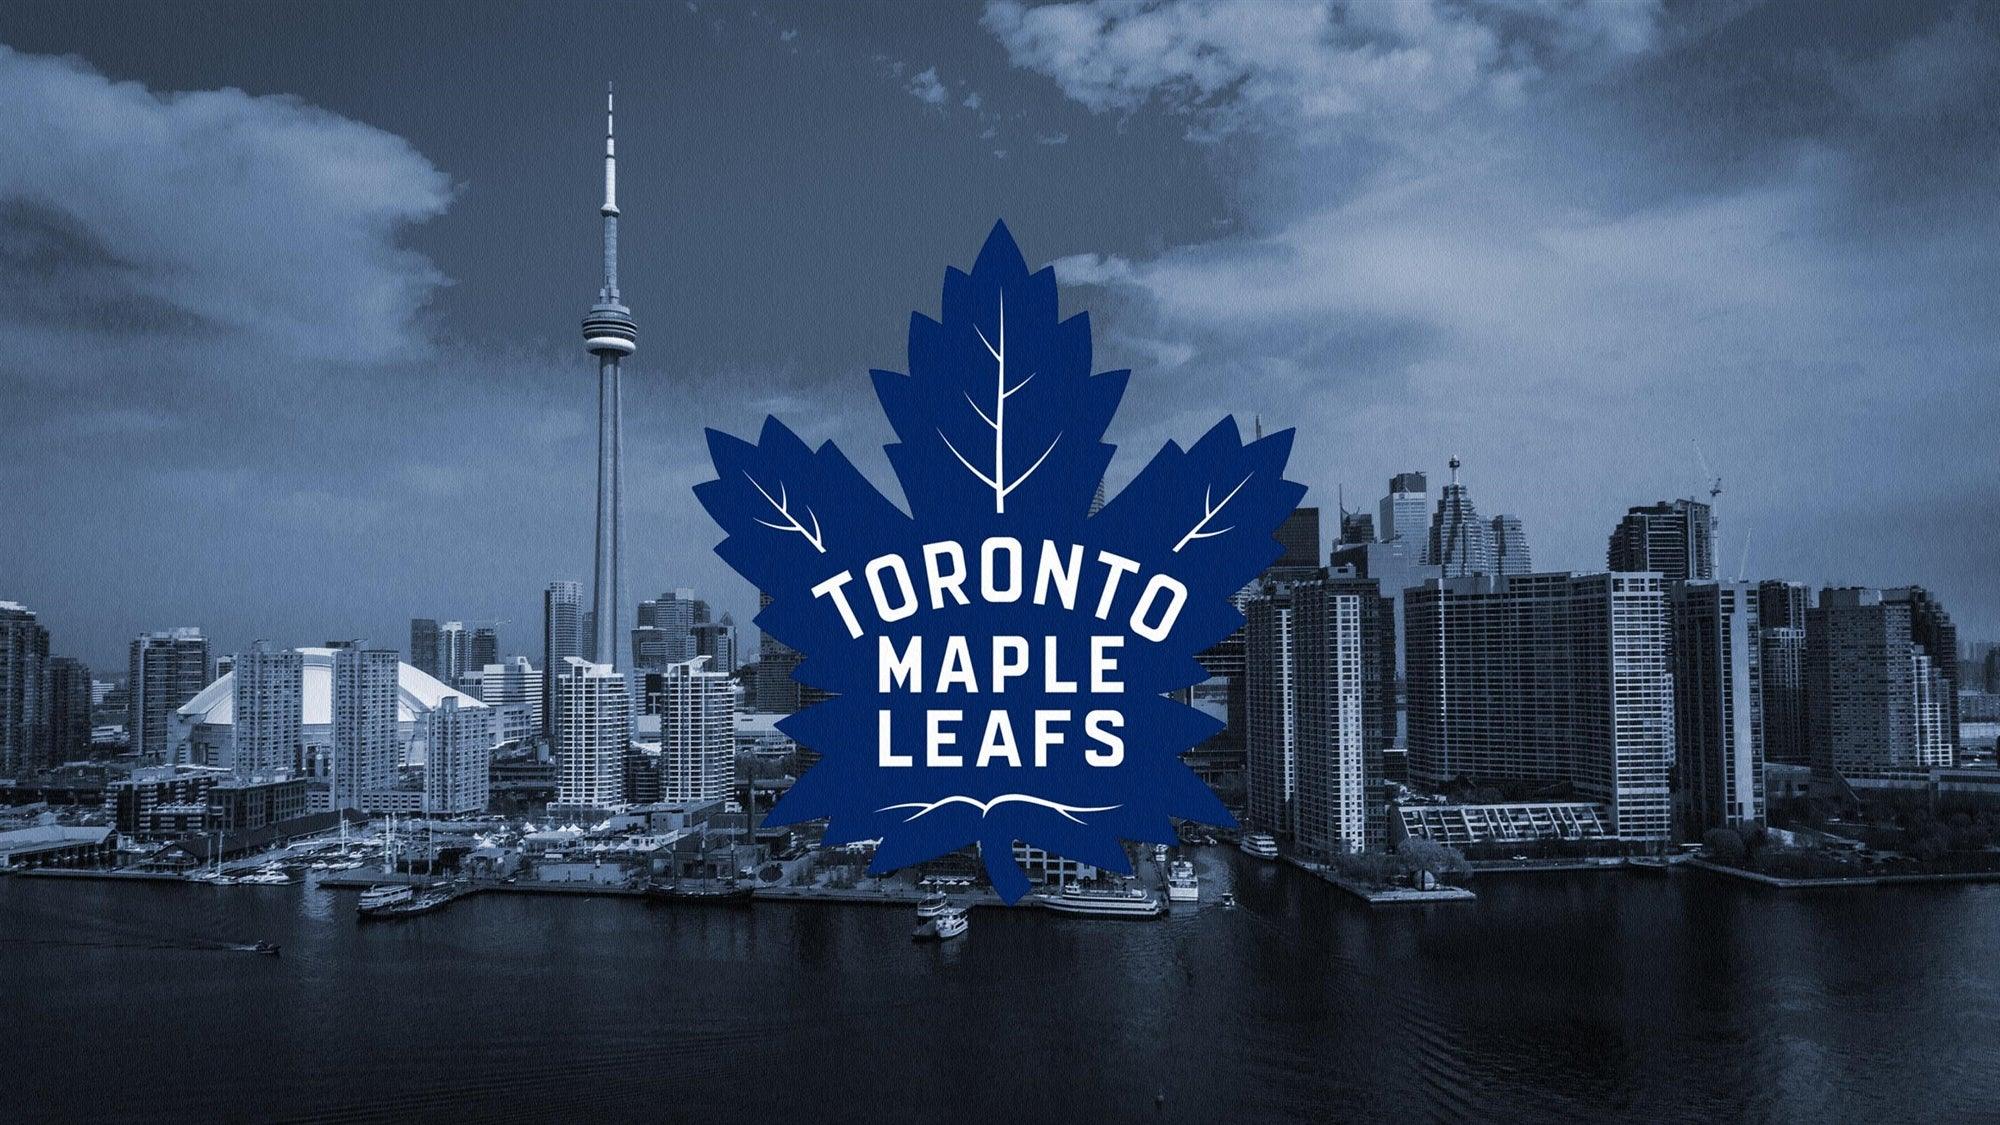 Auston Matthews Toronto Maple Leafs Fanatics Branded Goal Record T-Shirt -  Blue